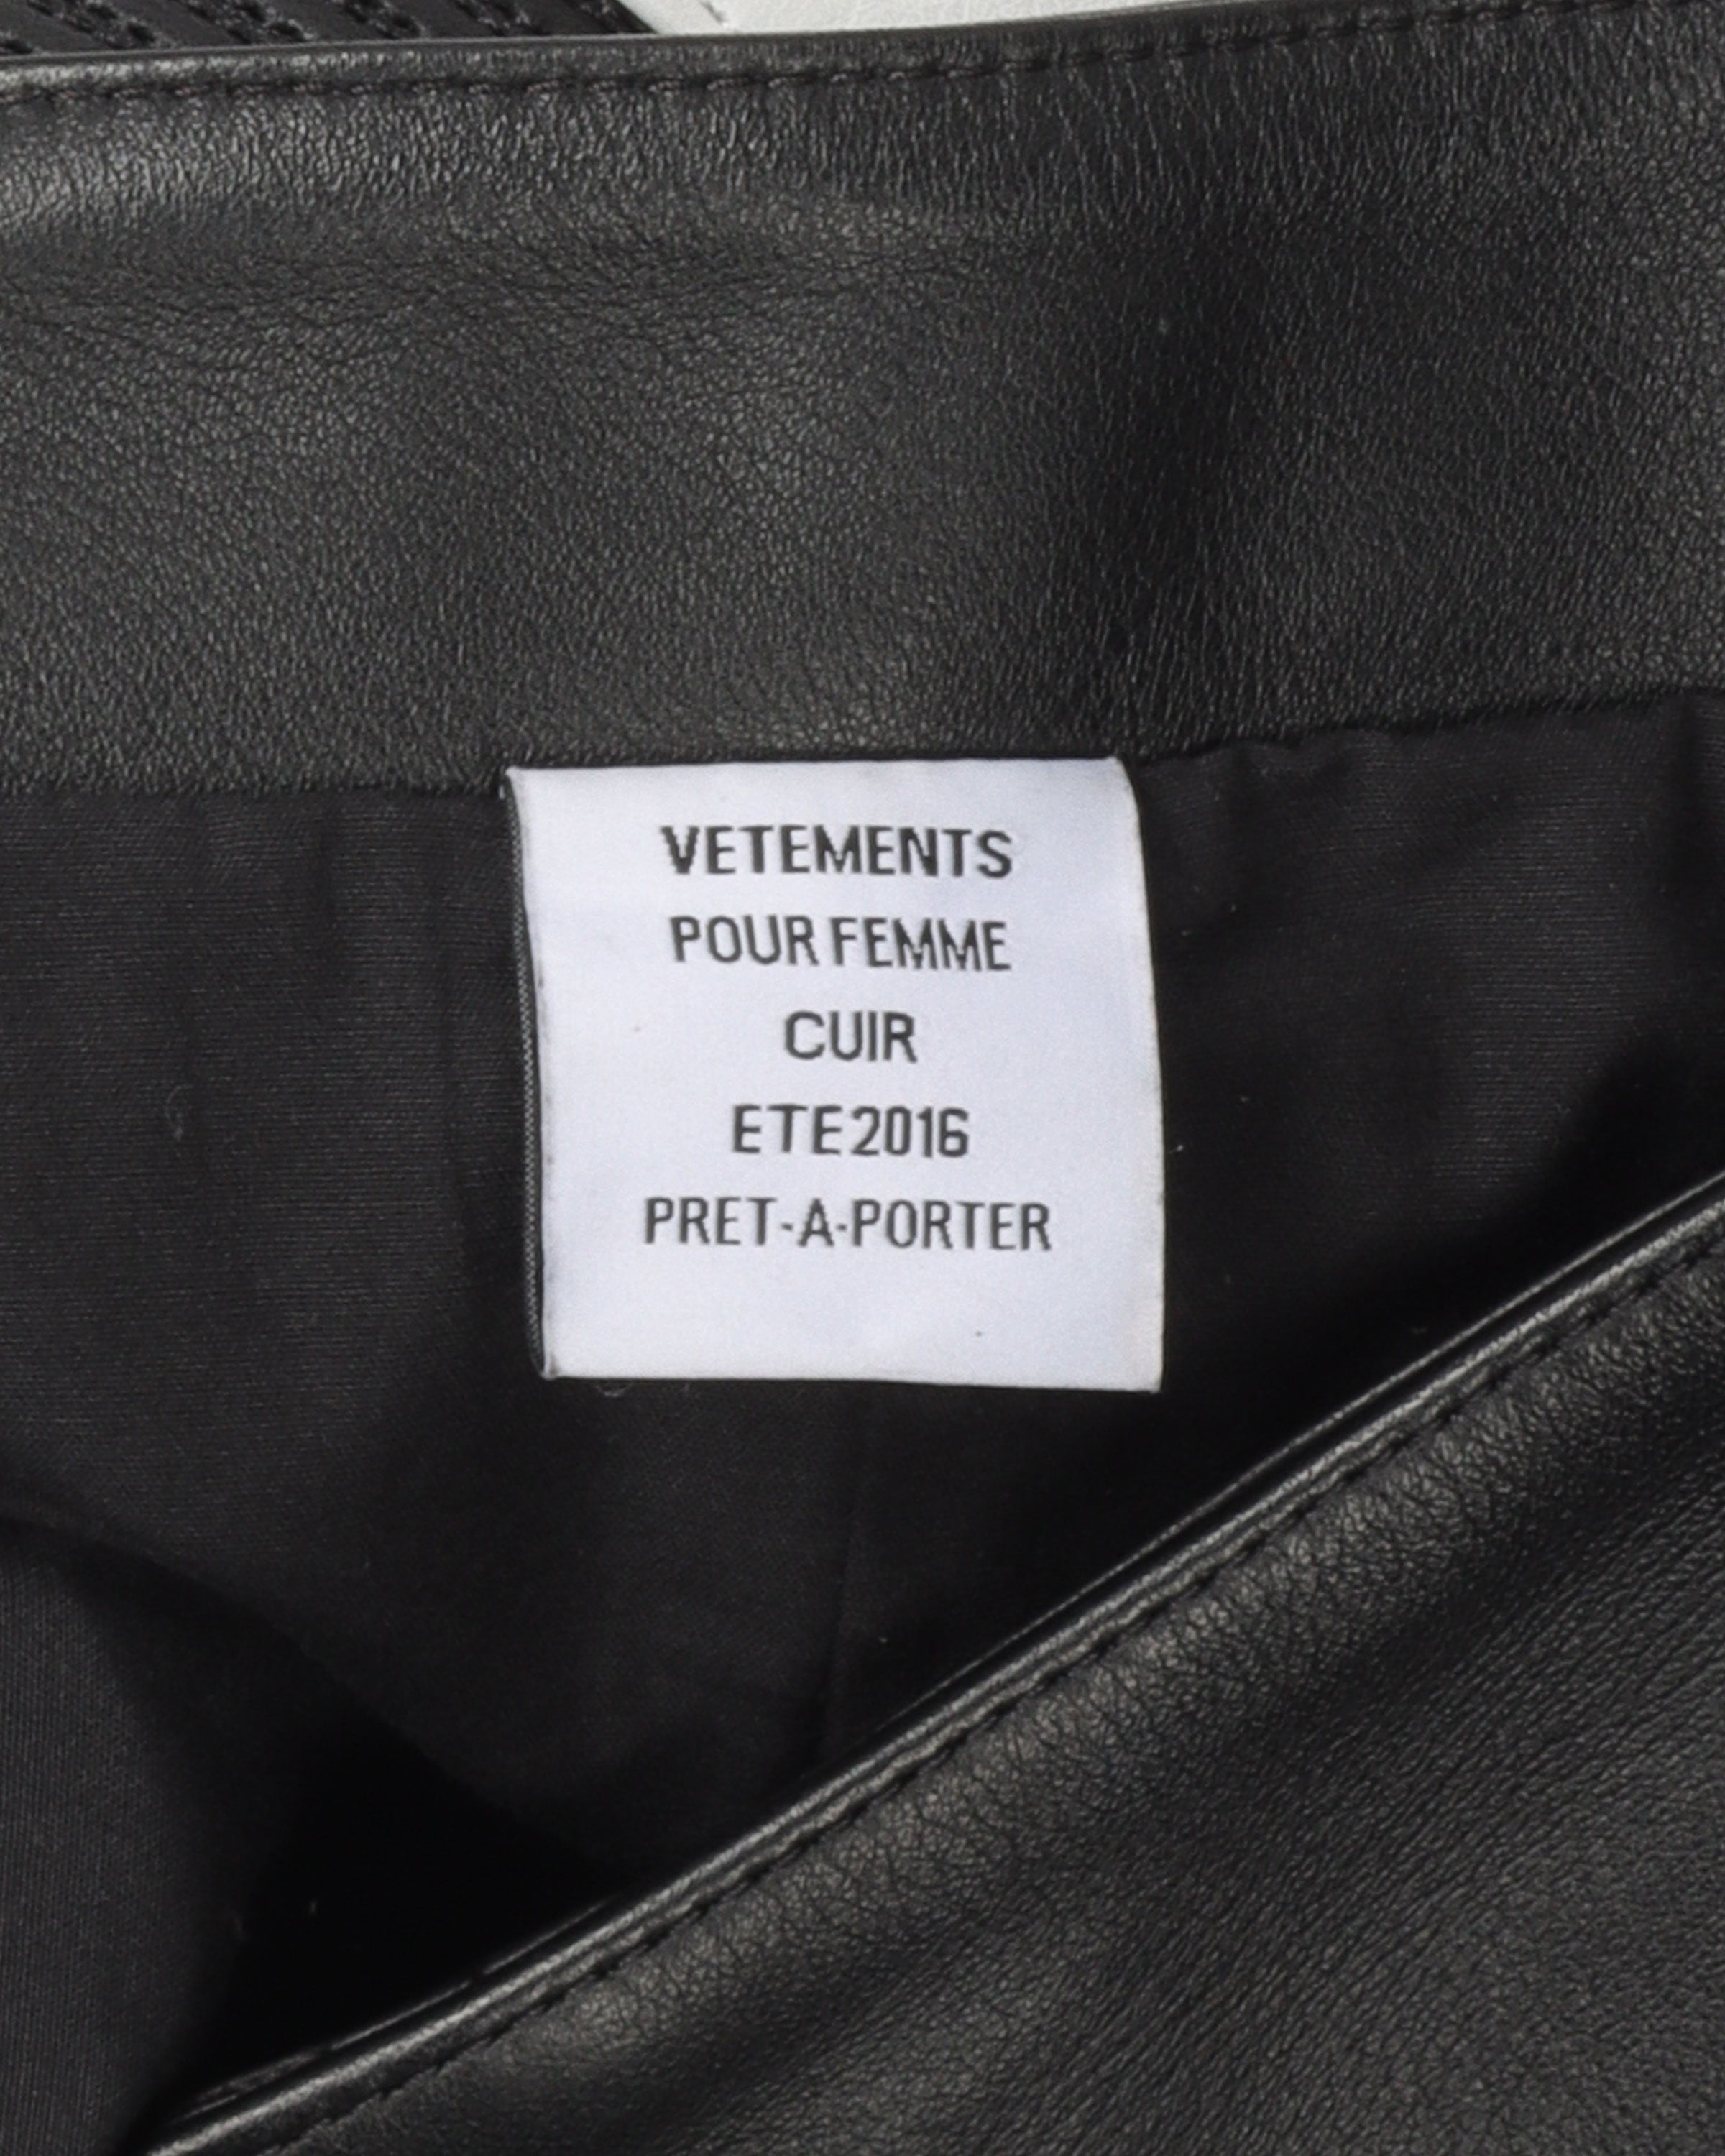 High-waisted faux leather pants - JMP - Jean Marc Philippe - Vêtements  grande taille femme